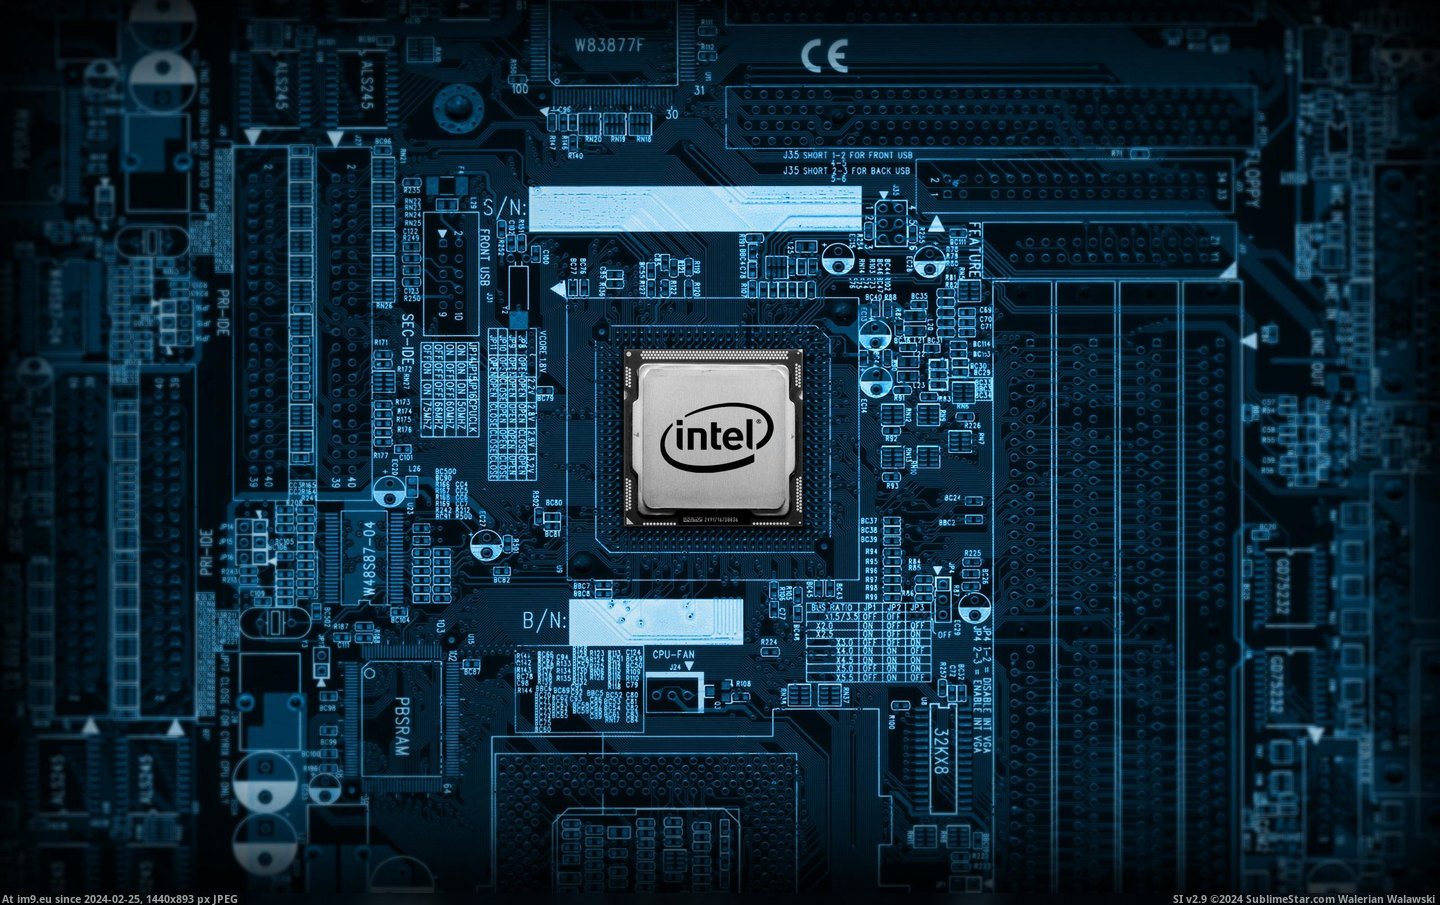 #Wallpaper #Chip #Intel #Wide Intel Chip Wide HD Wallpaper Pic. (Изображение из альбом Unique HD Wallpapers))